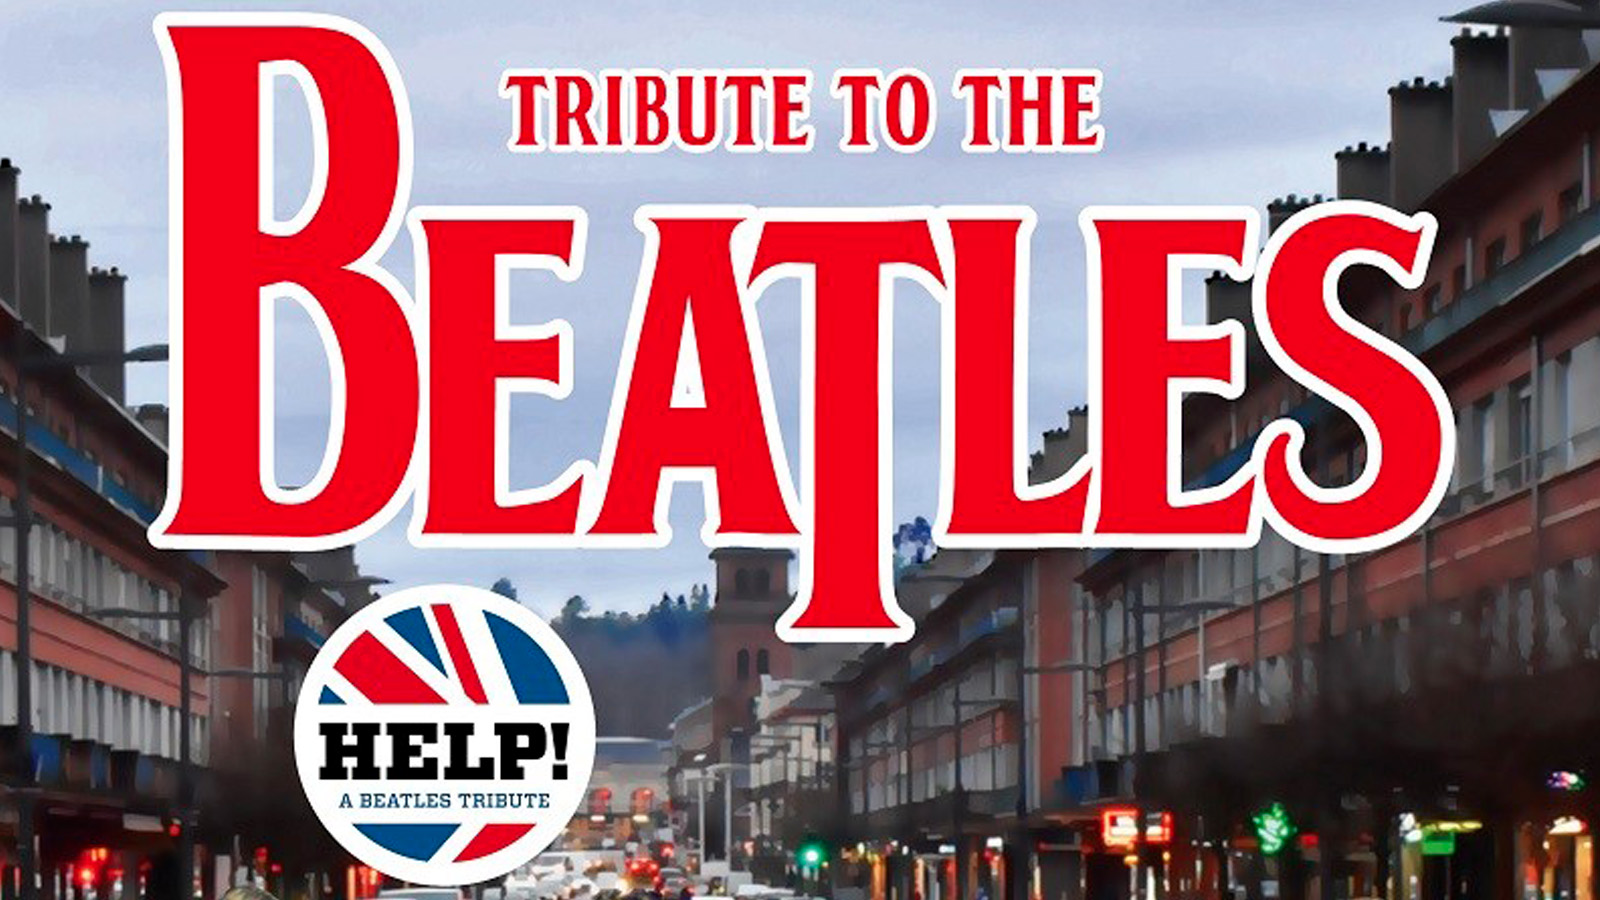 Help ! A Beatles Tribute